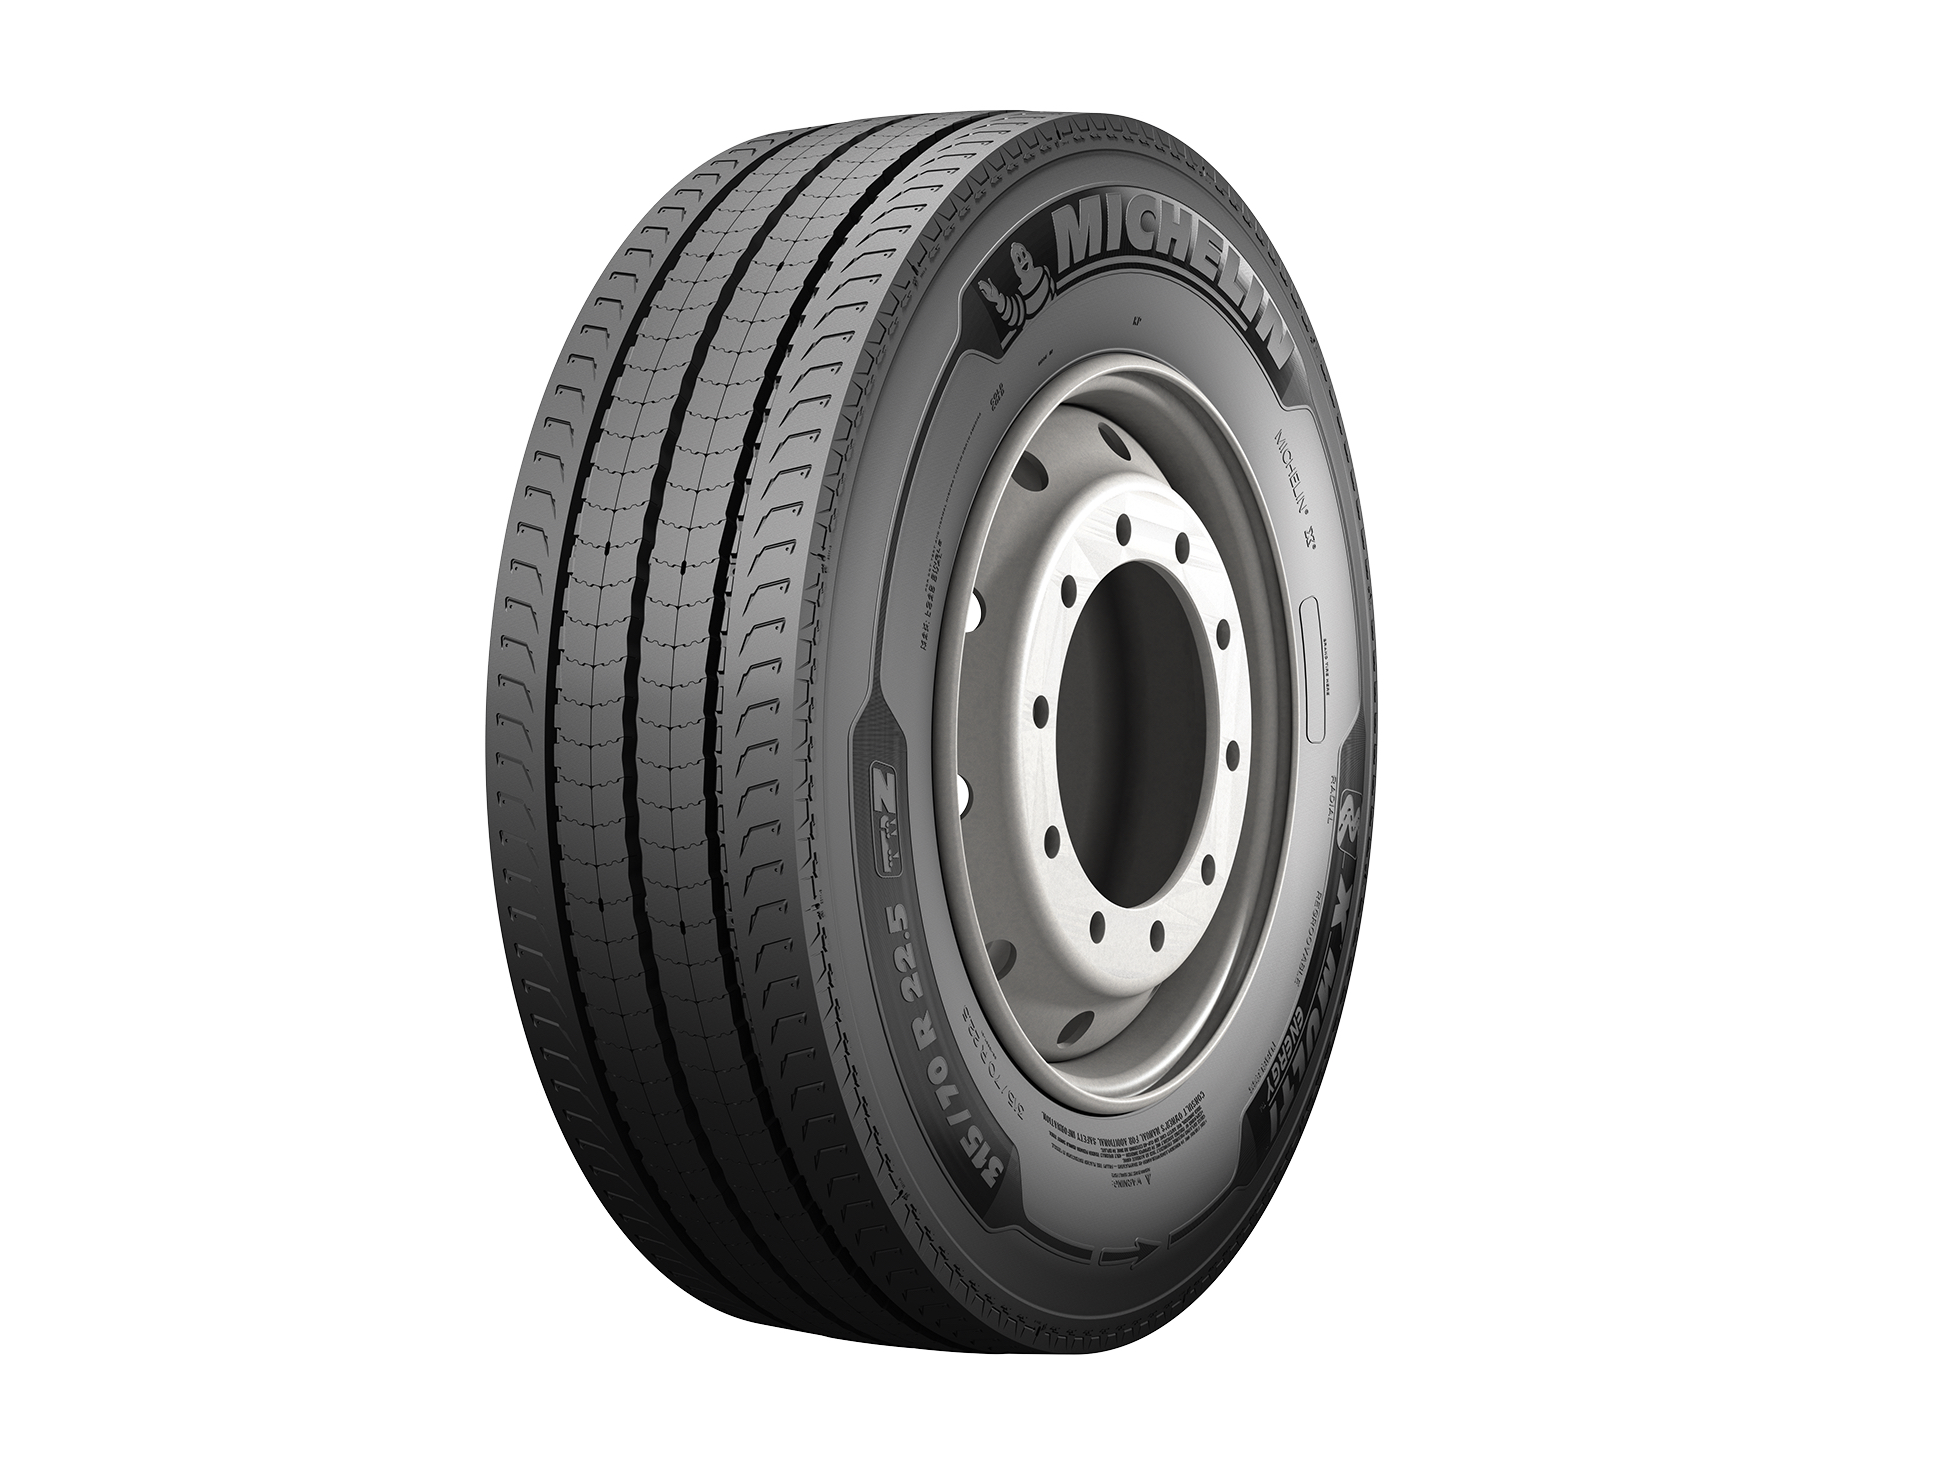 Gomme Nuove Michelin 315/80 R22.5 156L Xmultienergyz (8.00mm) pneumatici nuovi Estivo